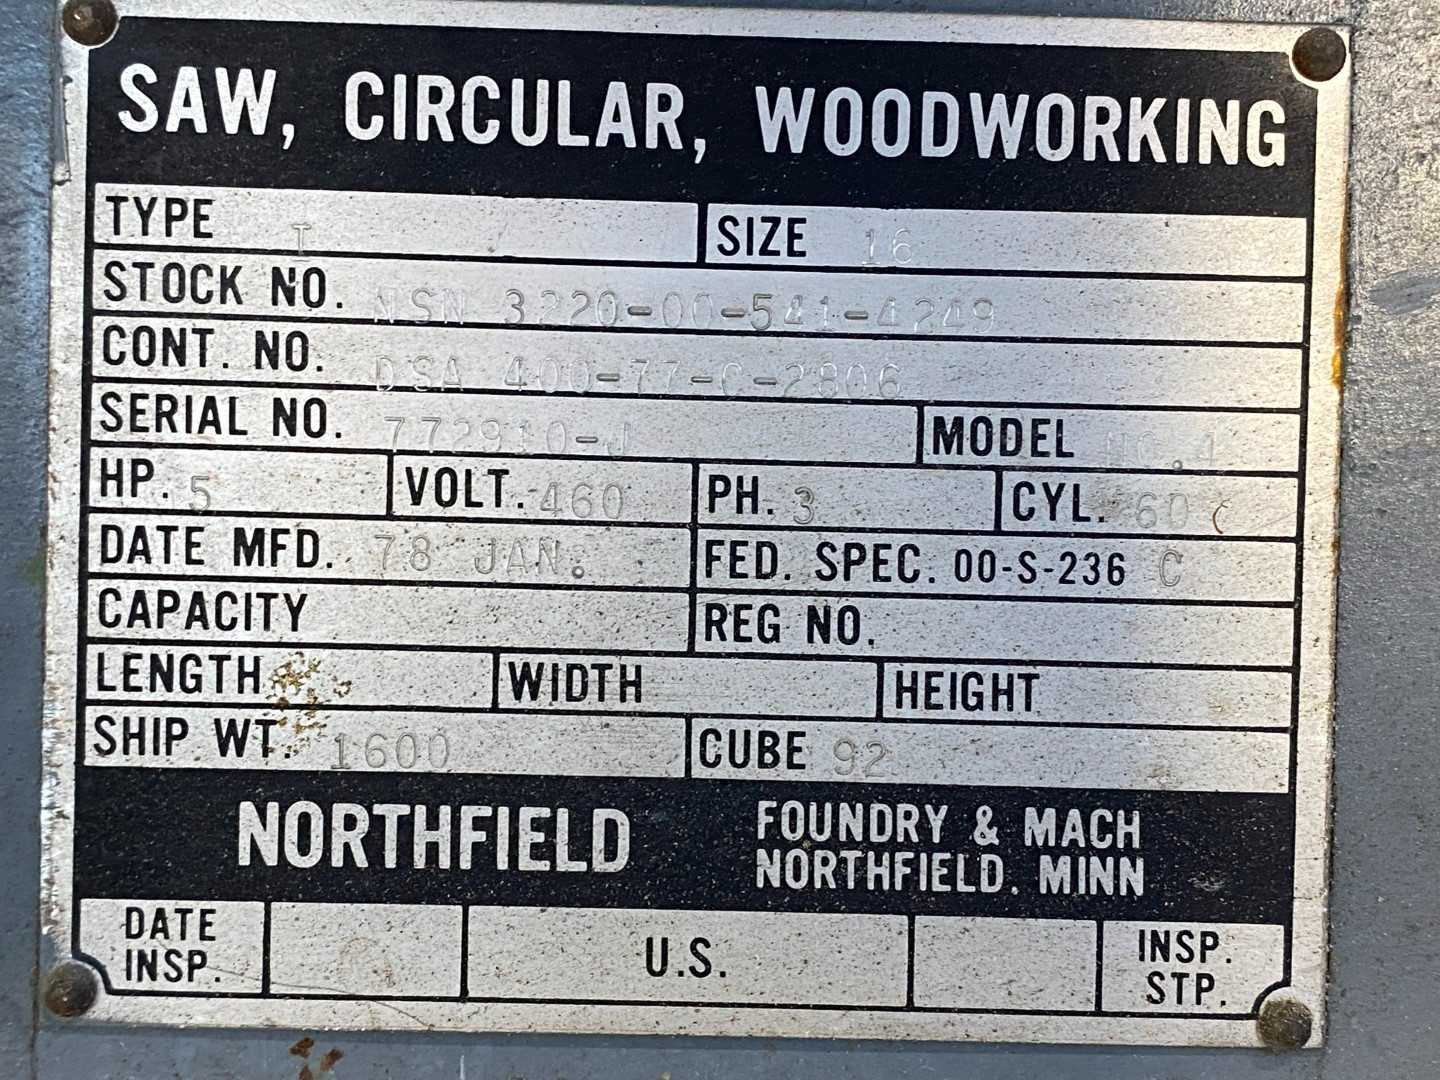 Northfield Model 4 Circular Saw, 5 HP, 3460RPM, 3-Phase Type I Size 16